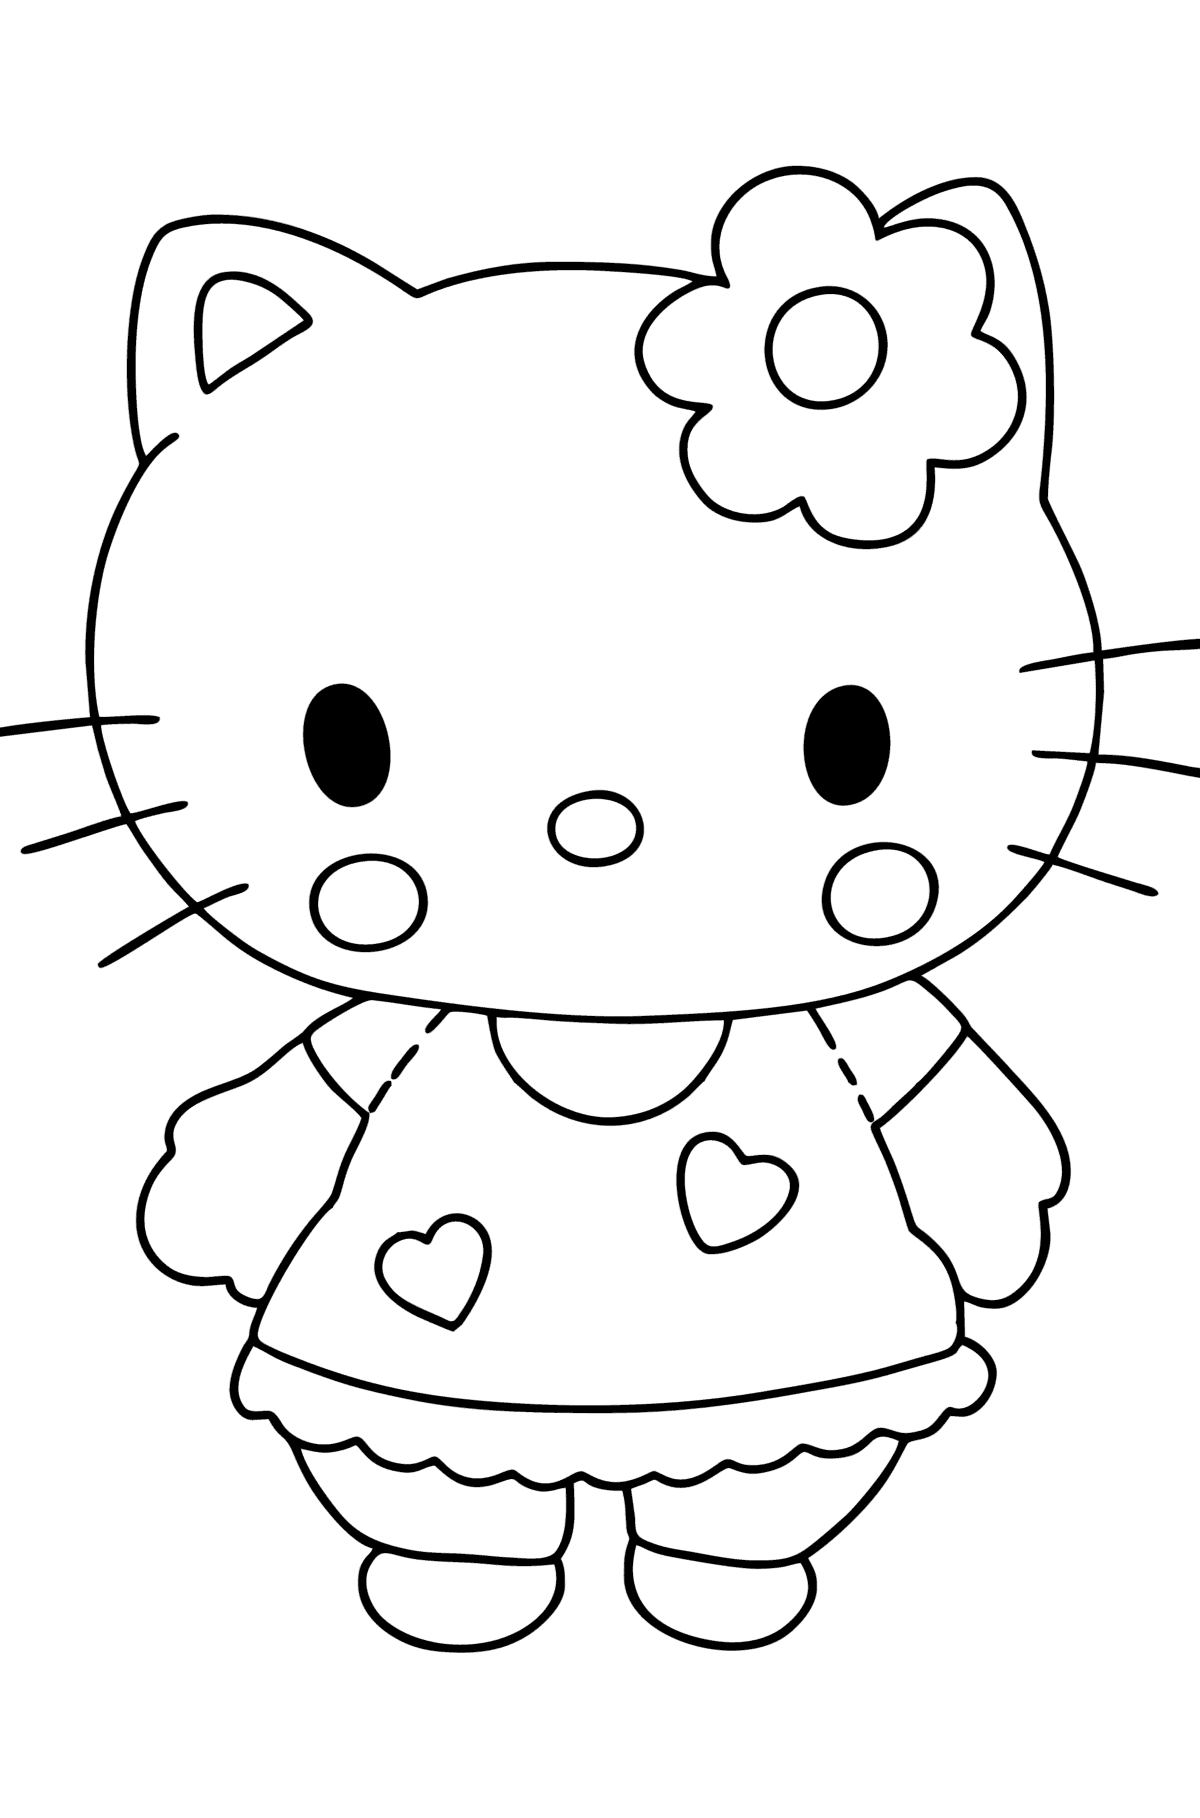 Раскраска Хелло Китти (Hello Kitty) - Картинки для Детей